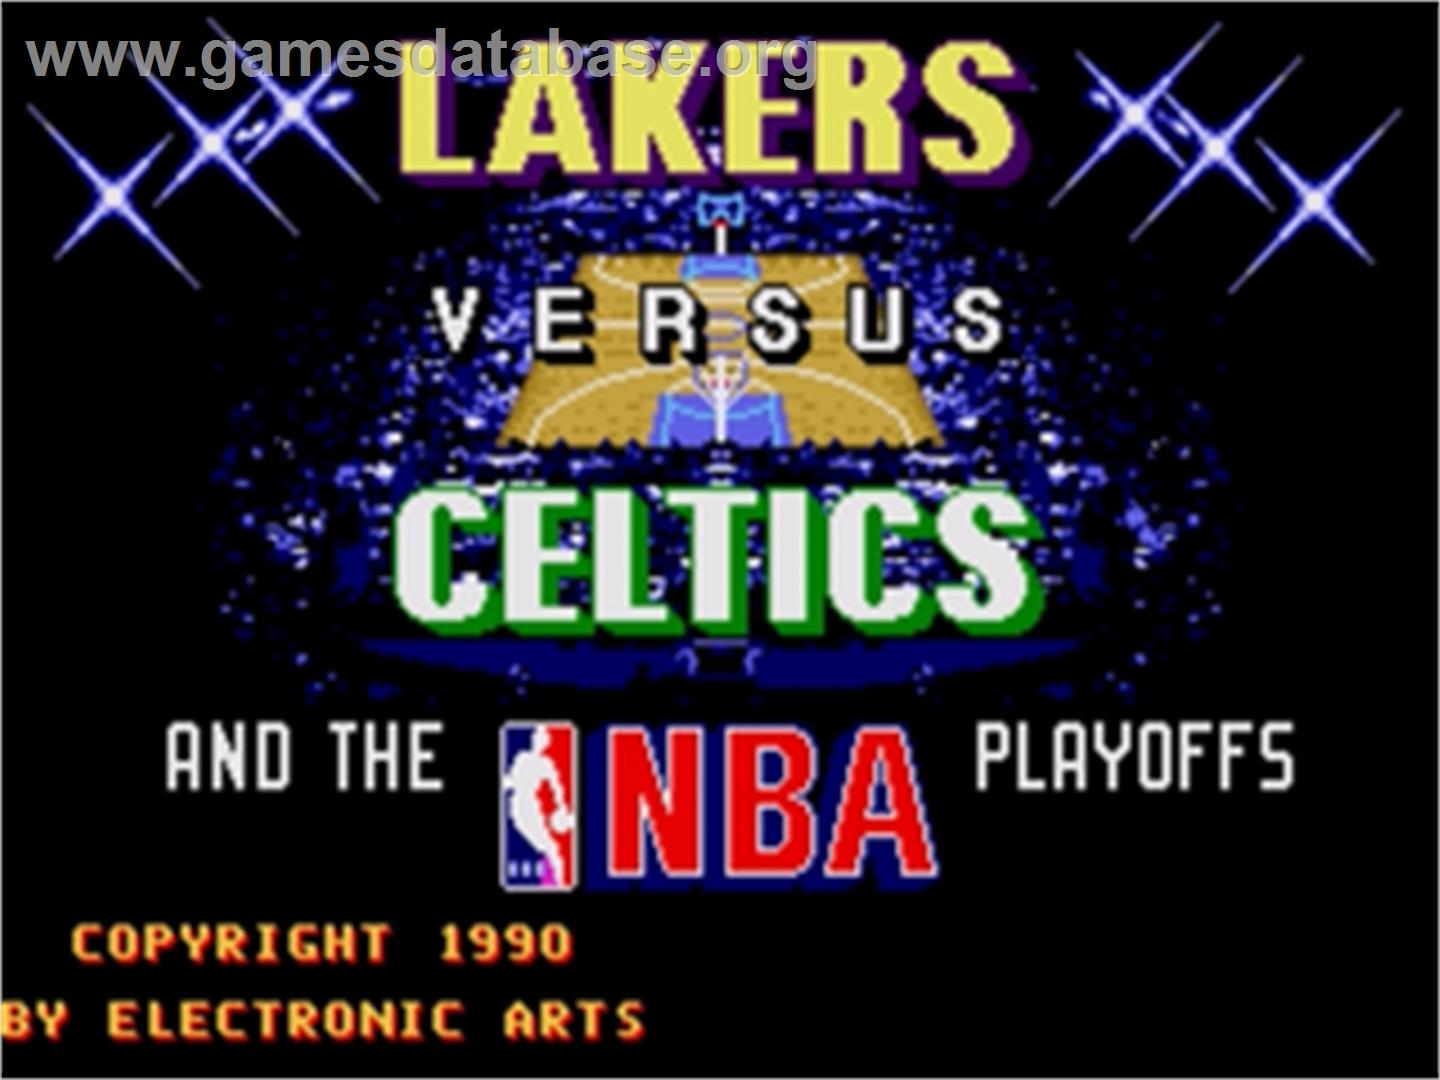 Lakers vs. Celtics and the NBA Playoffs - Sega Genesis - Artwork - Title Screen